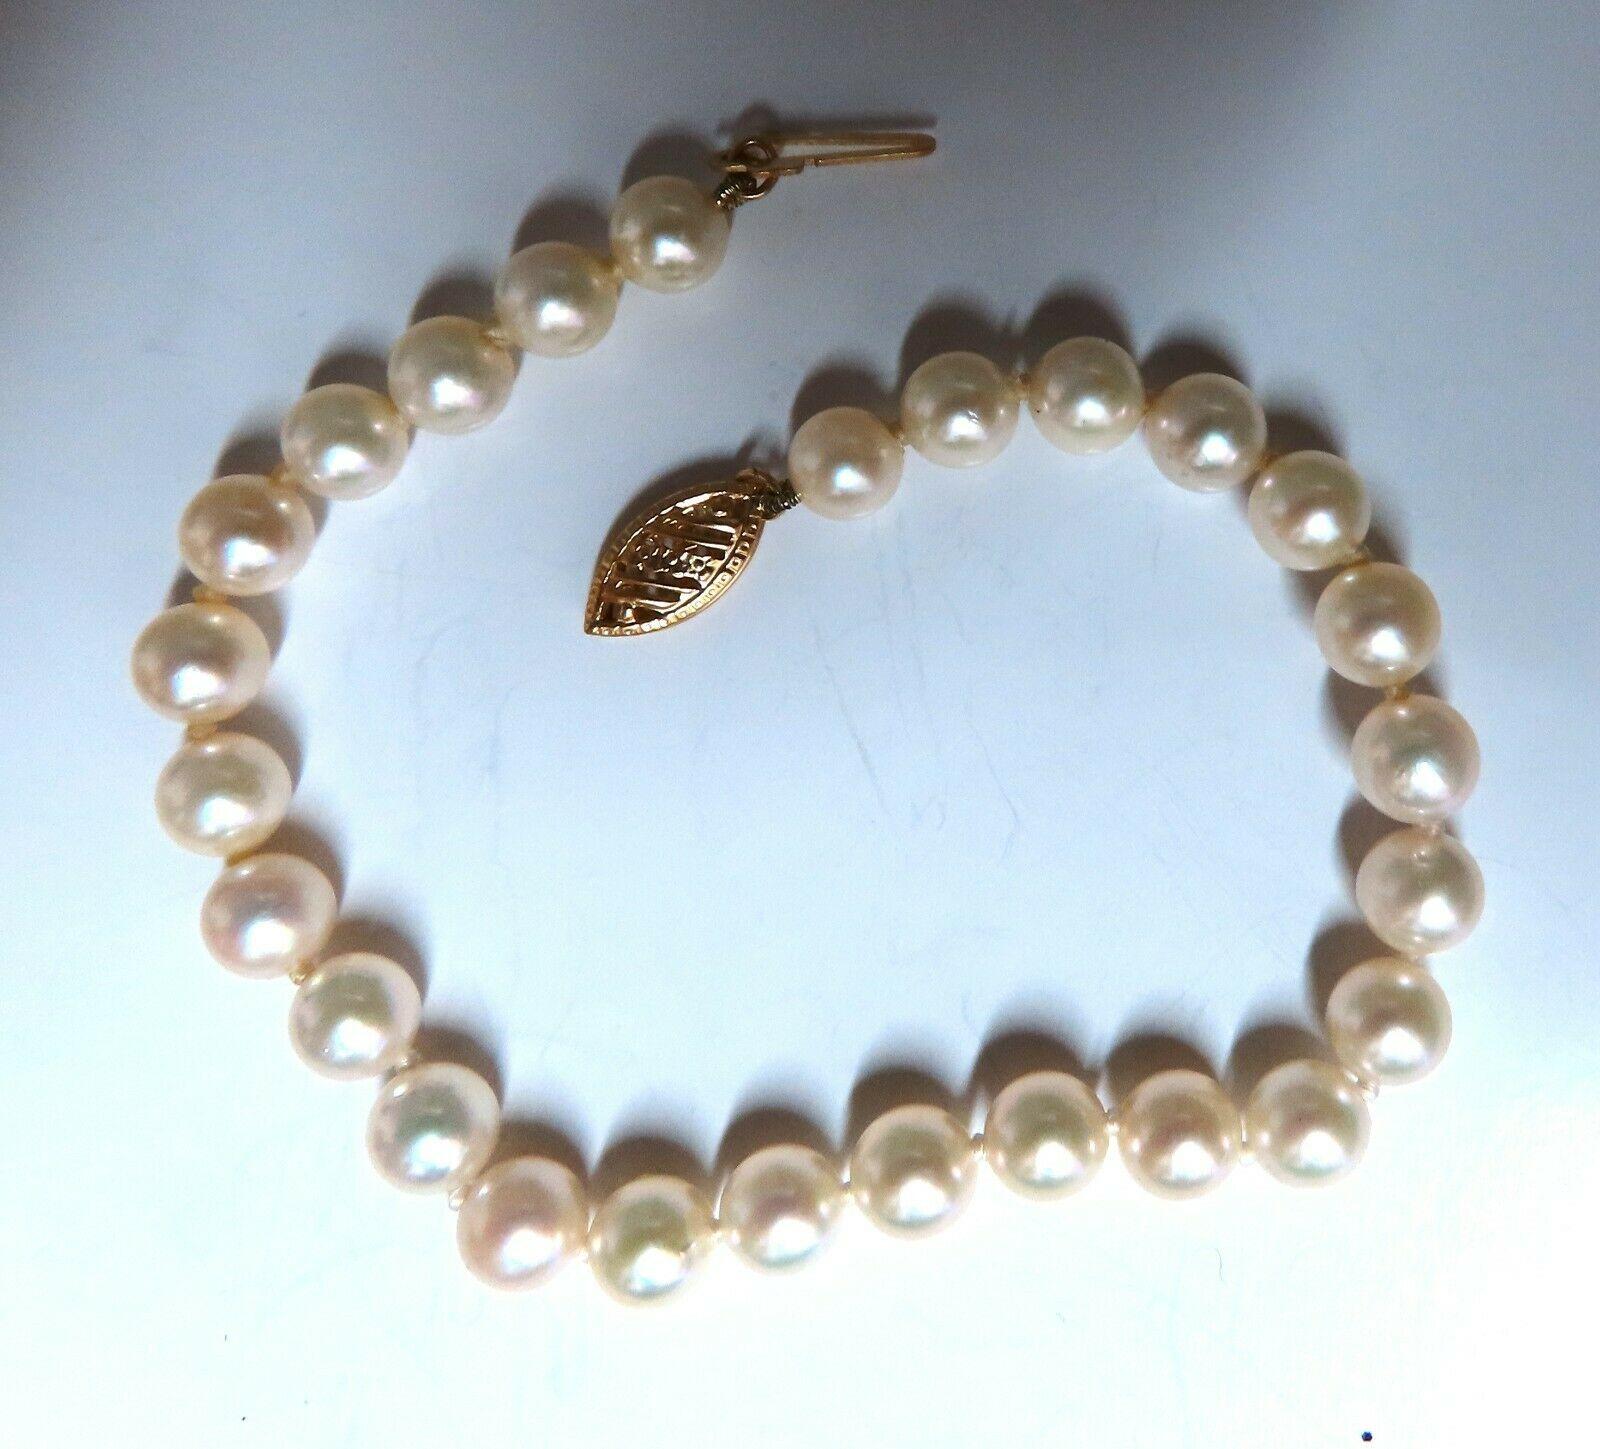 5.8 mm Akoya pearls bracelet.

14 karat yellow gold

7 in Long